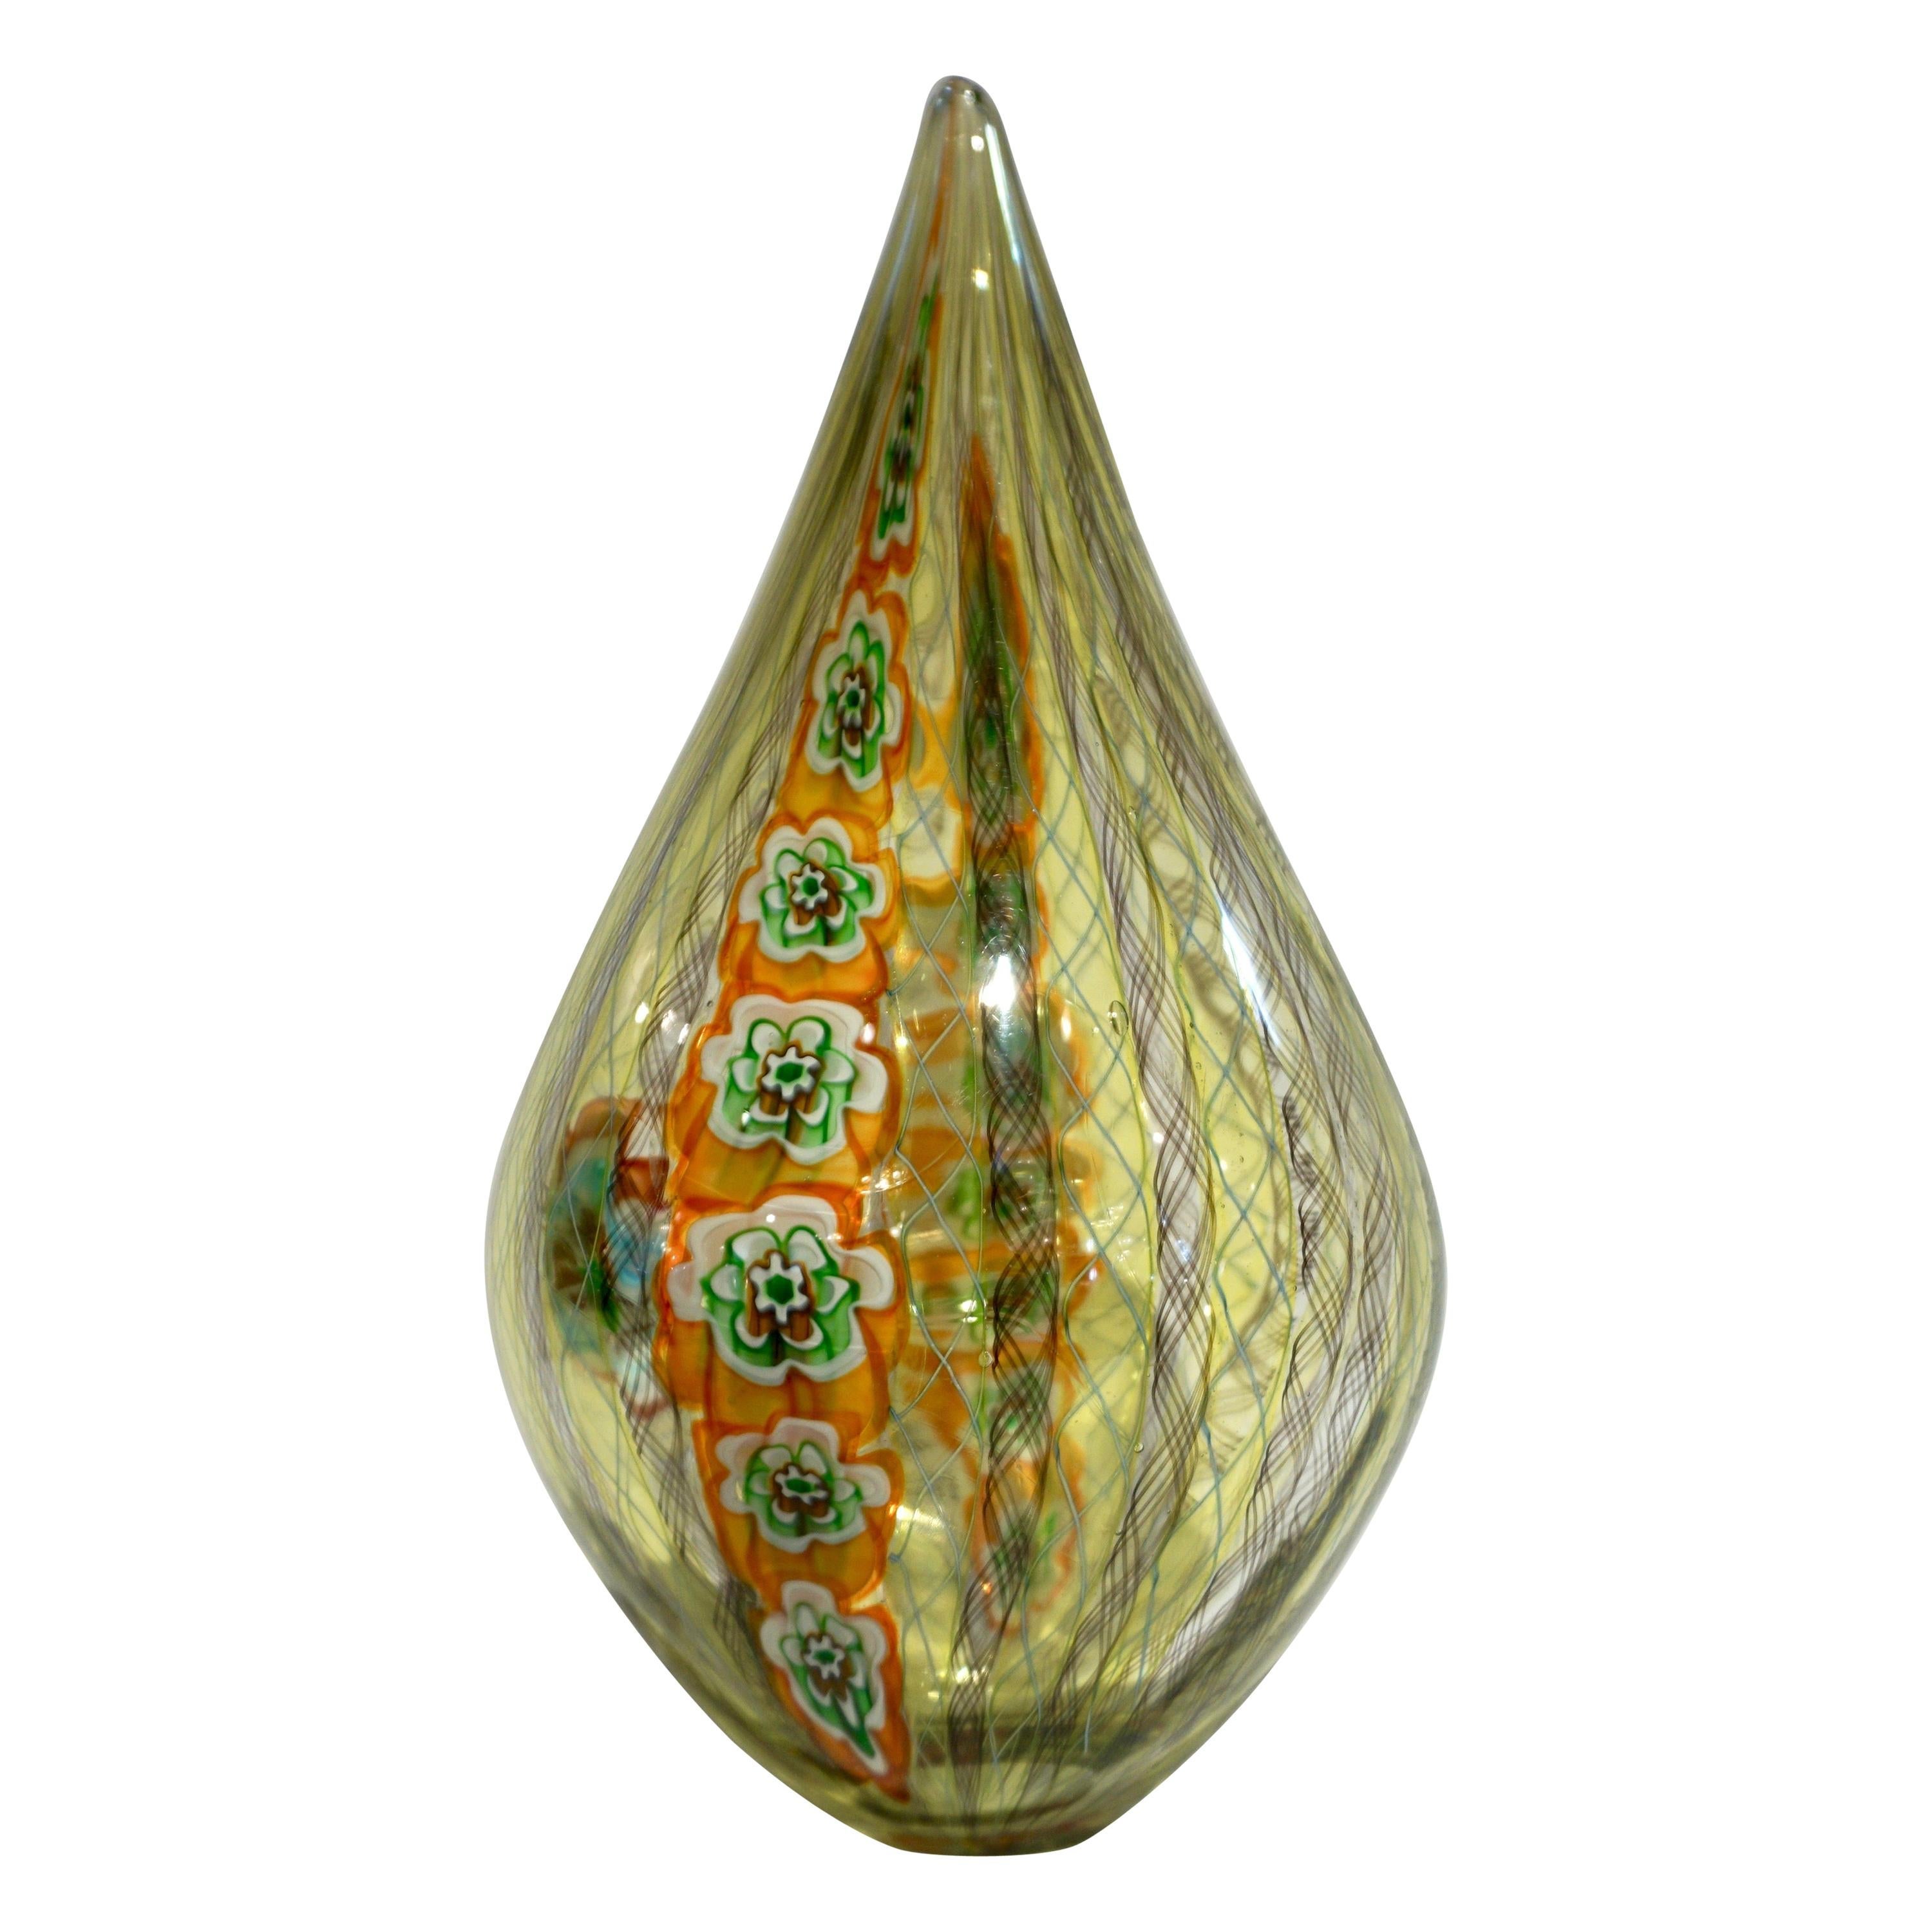 Tagliapietra Italian Modern Green Yellow Orange Murano Glass Drop Sculpture Vase